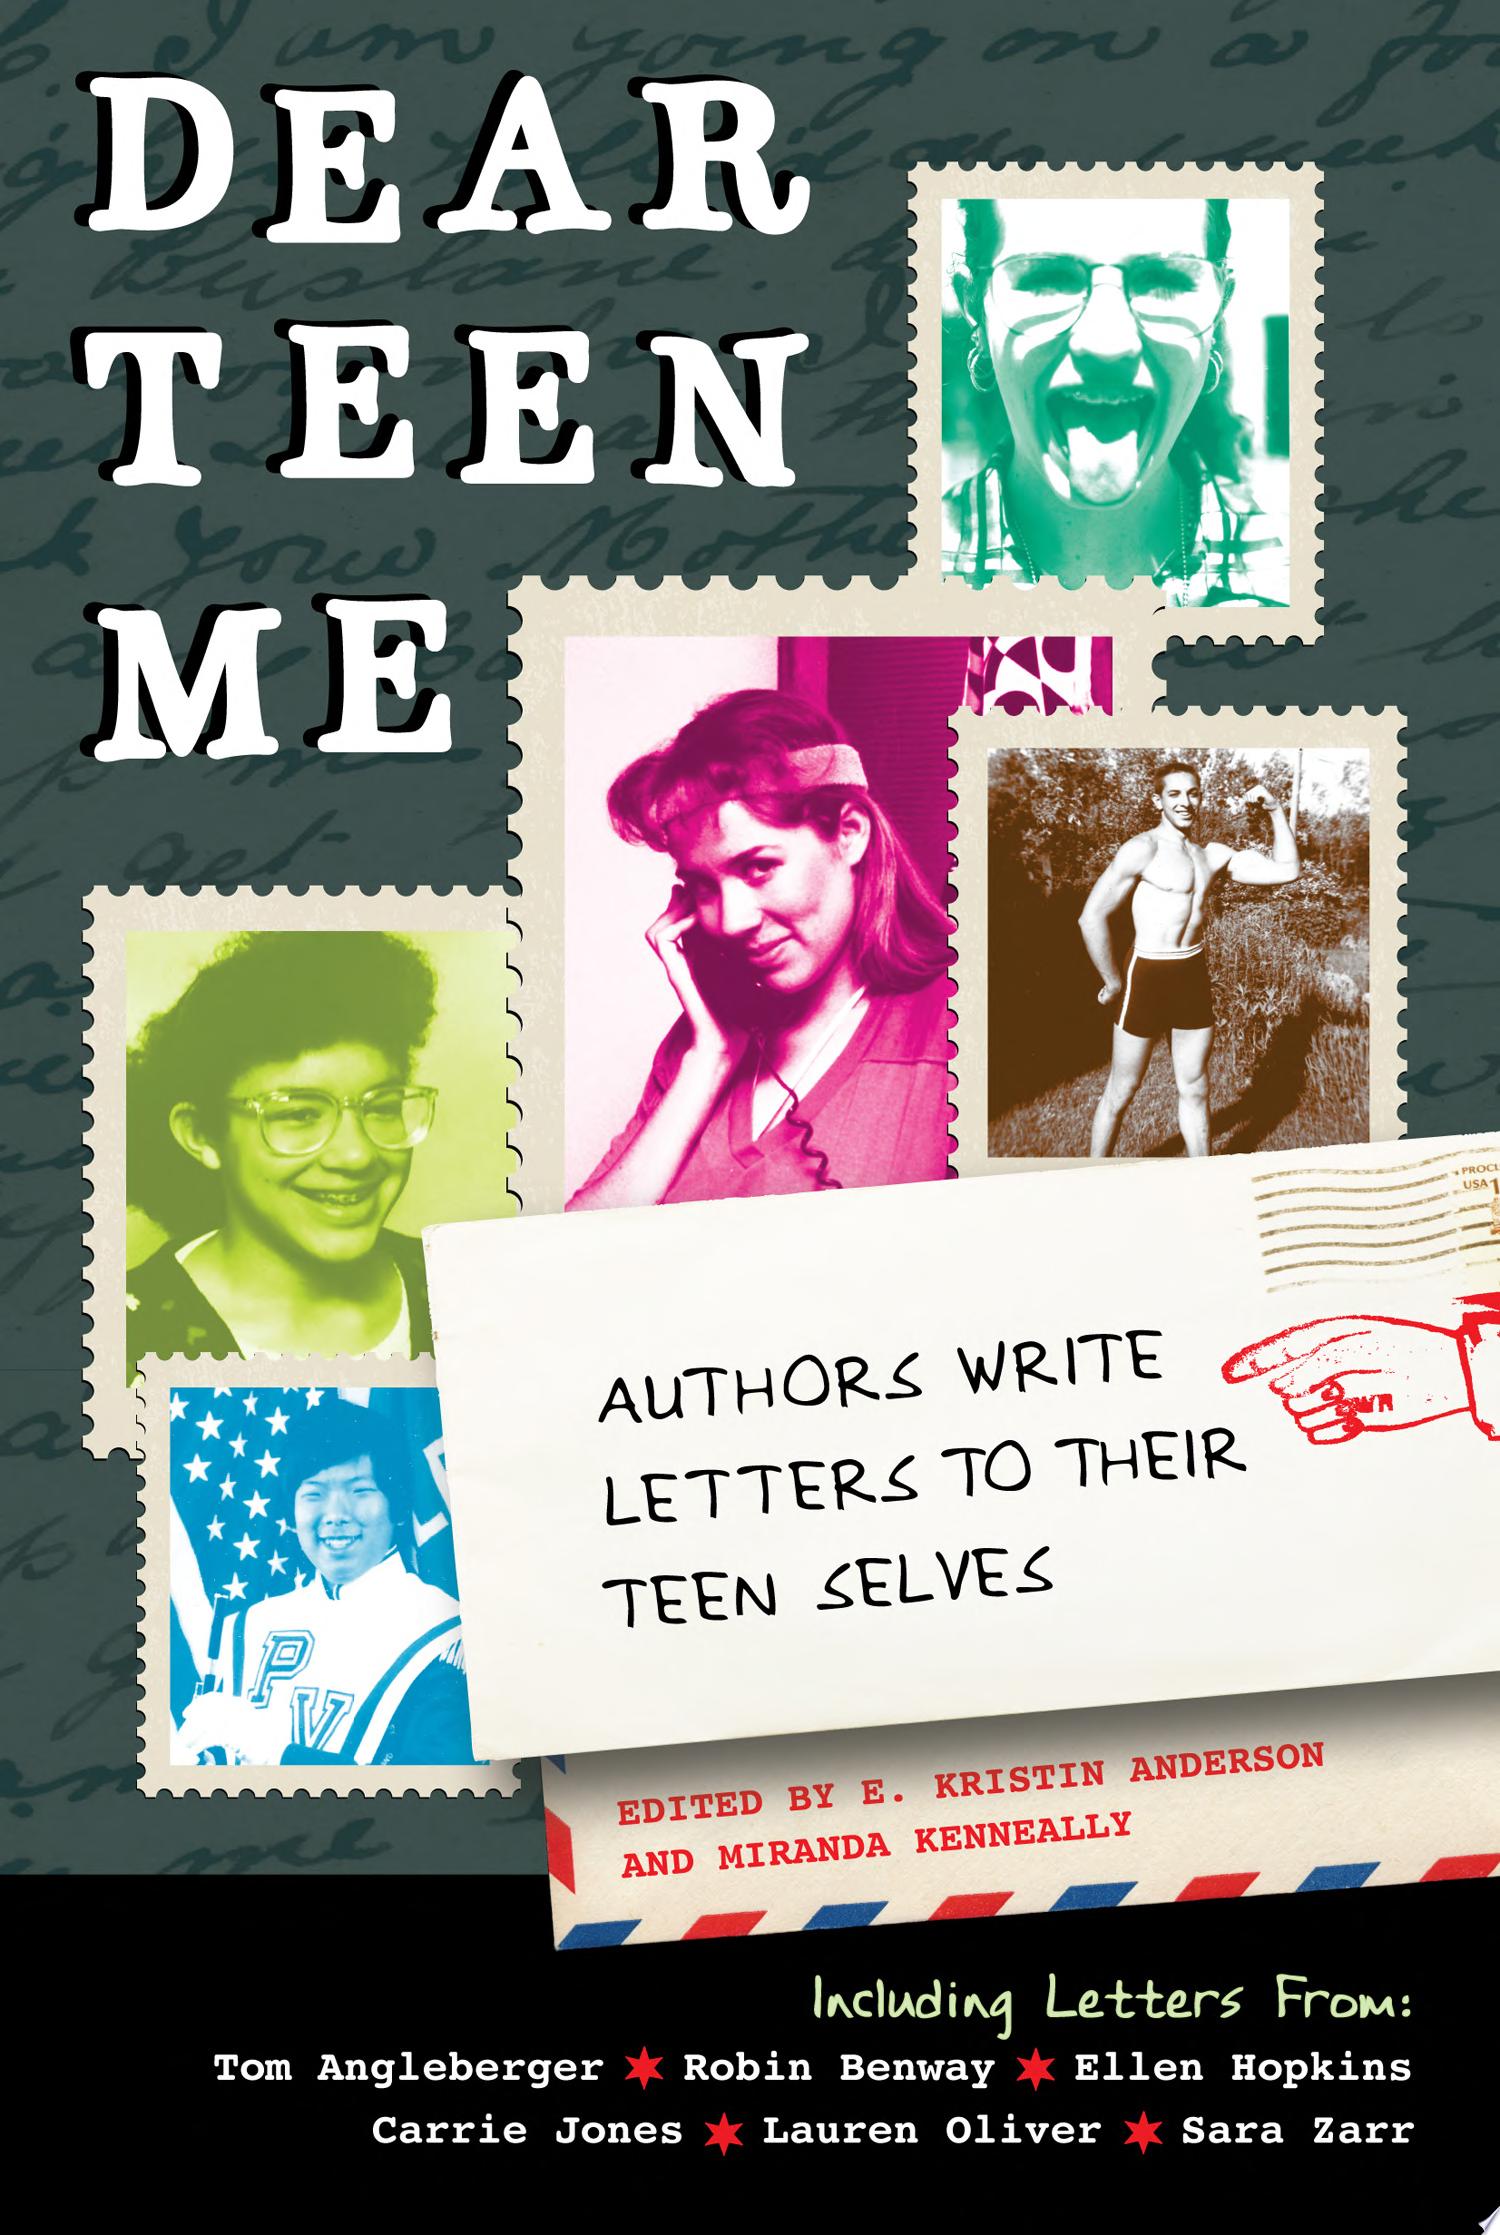 Image for "Dear Teen Me"